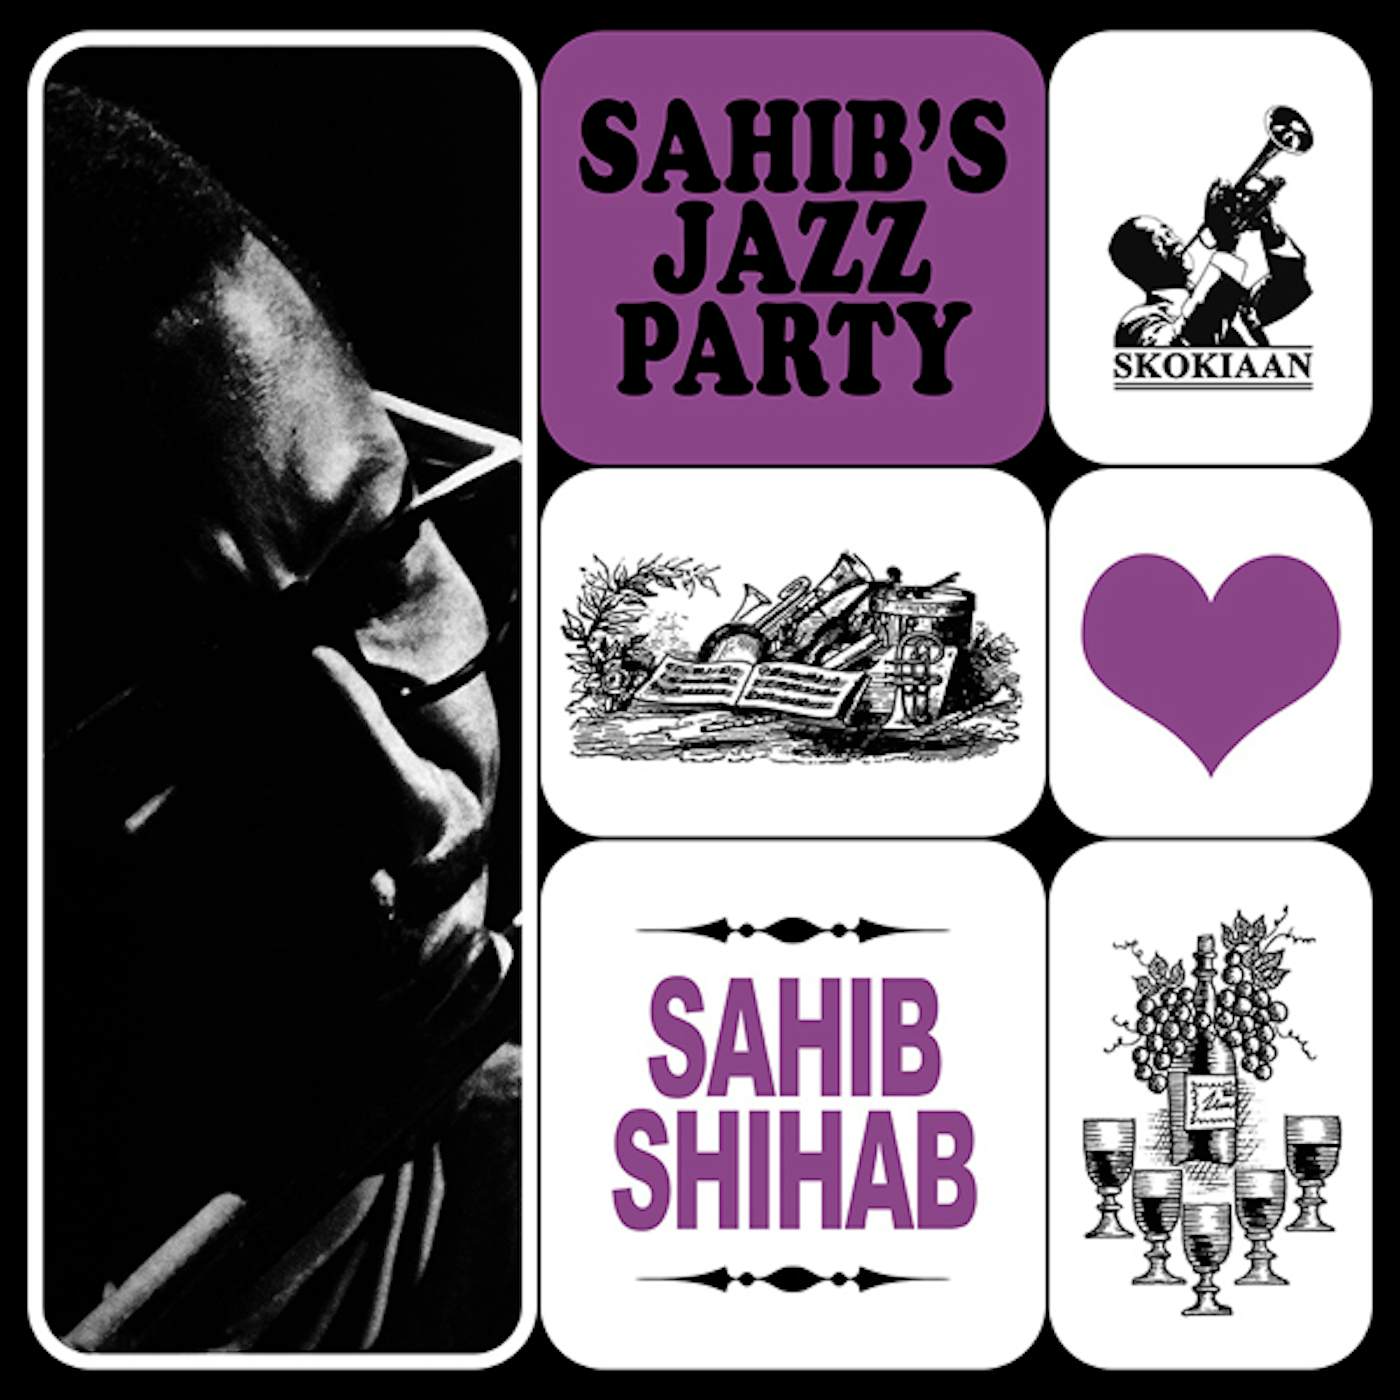 Sahib Shihab Sahib's Jazz Party Vinyl Record